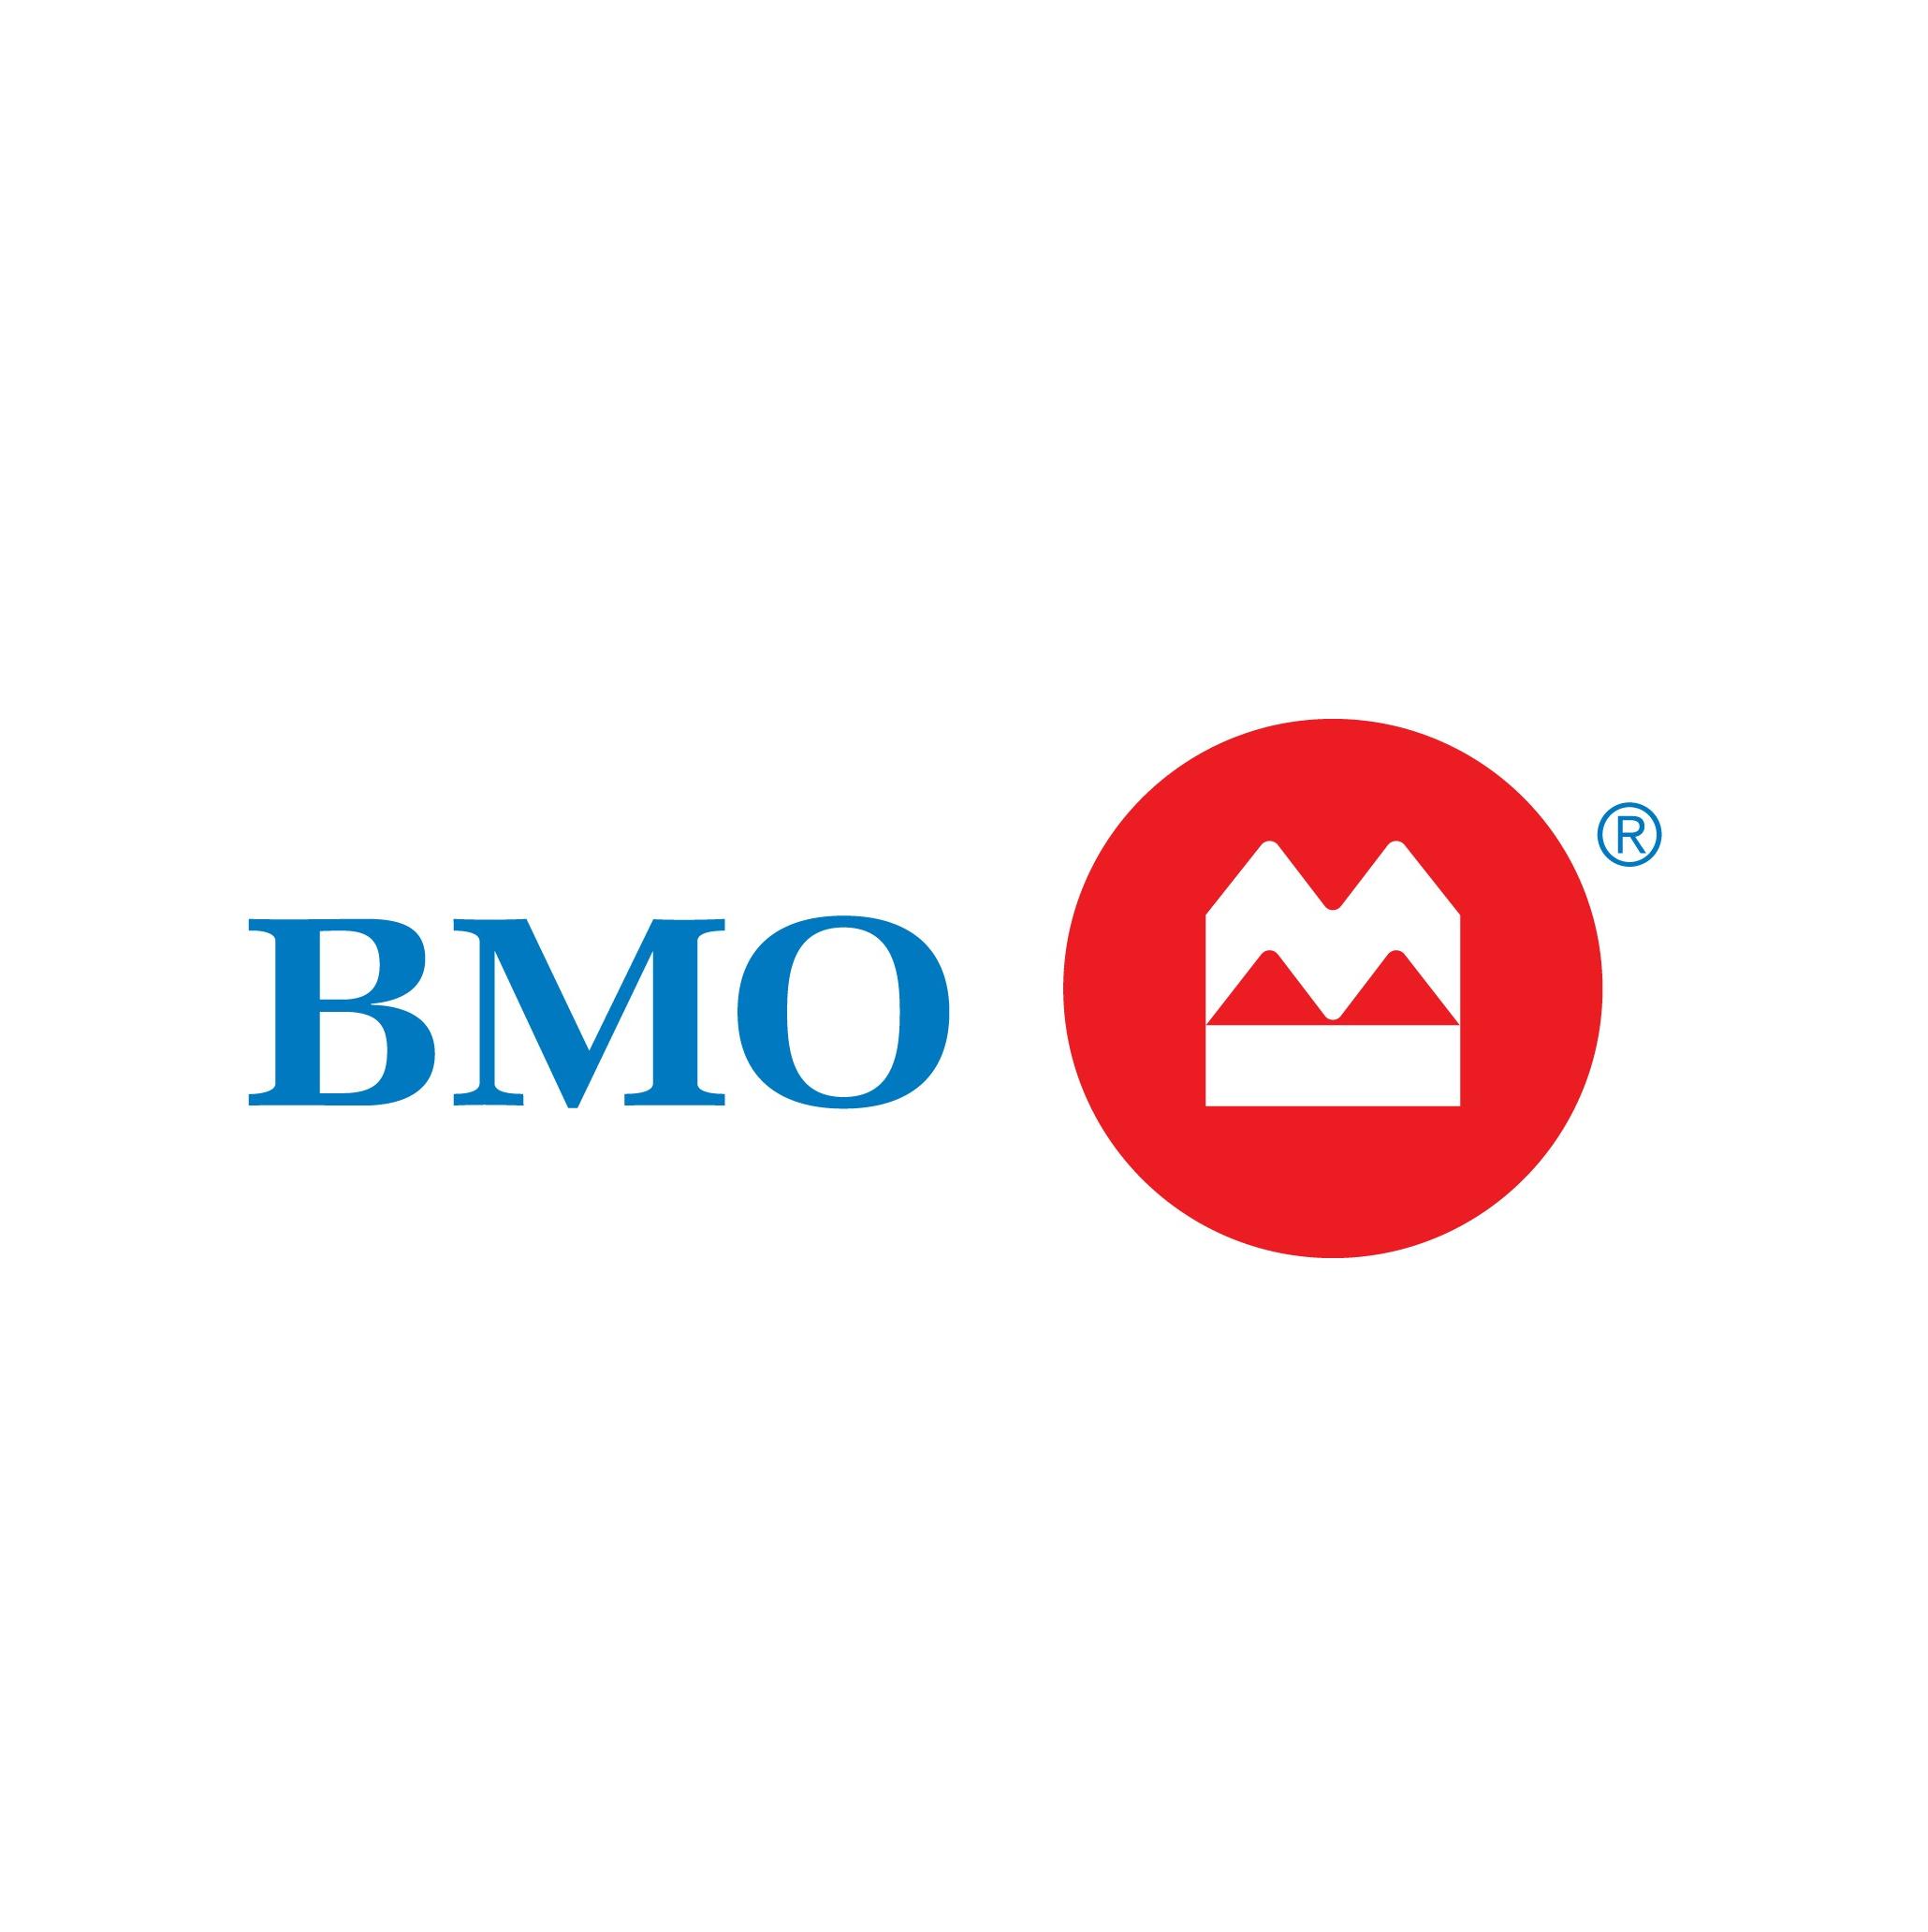 BMO Dental Practice Finance Group